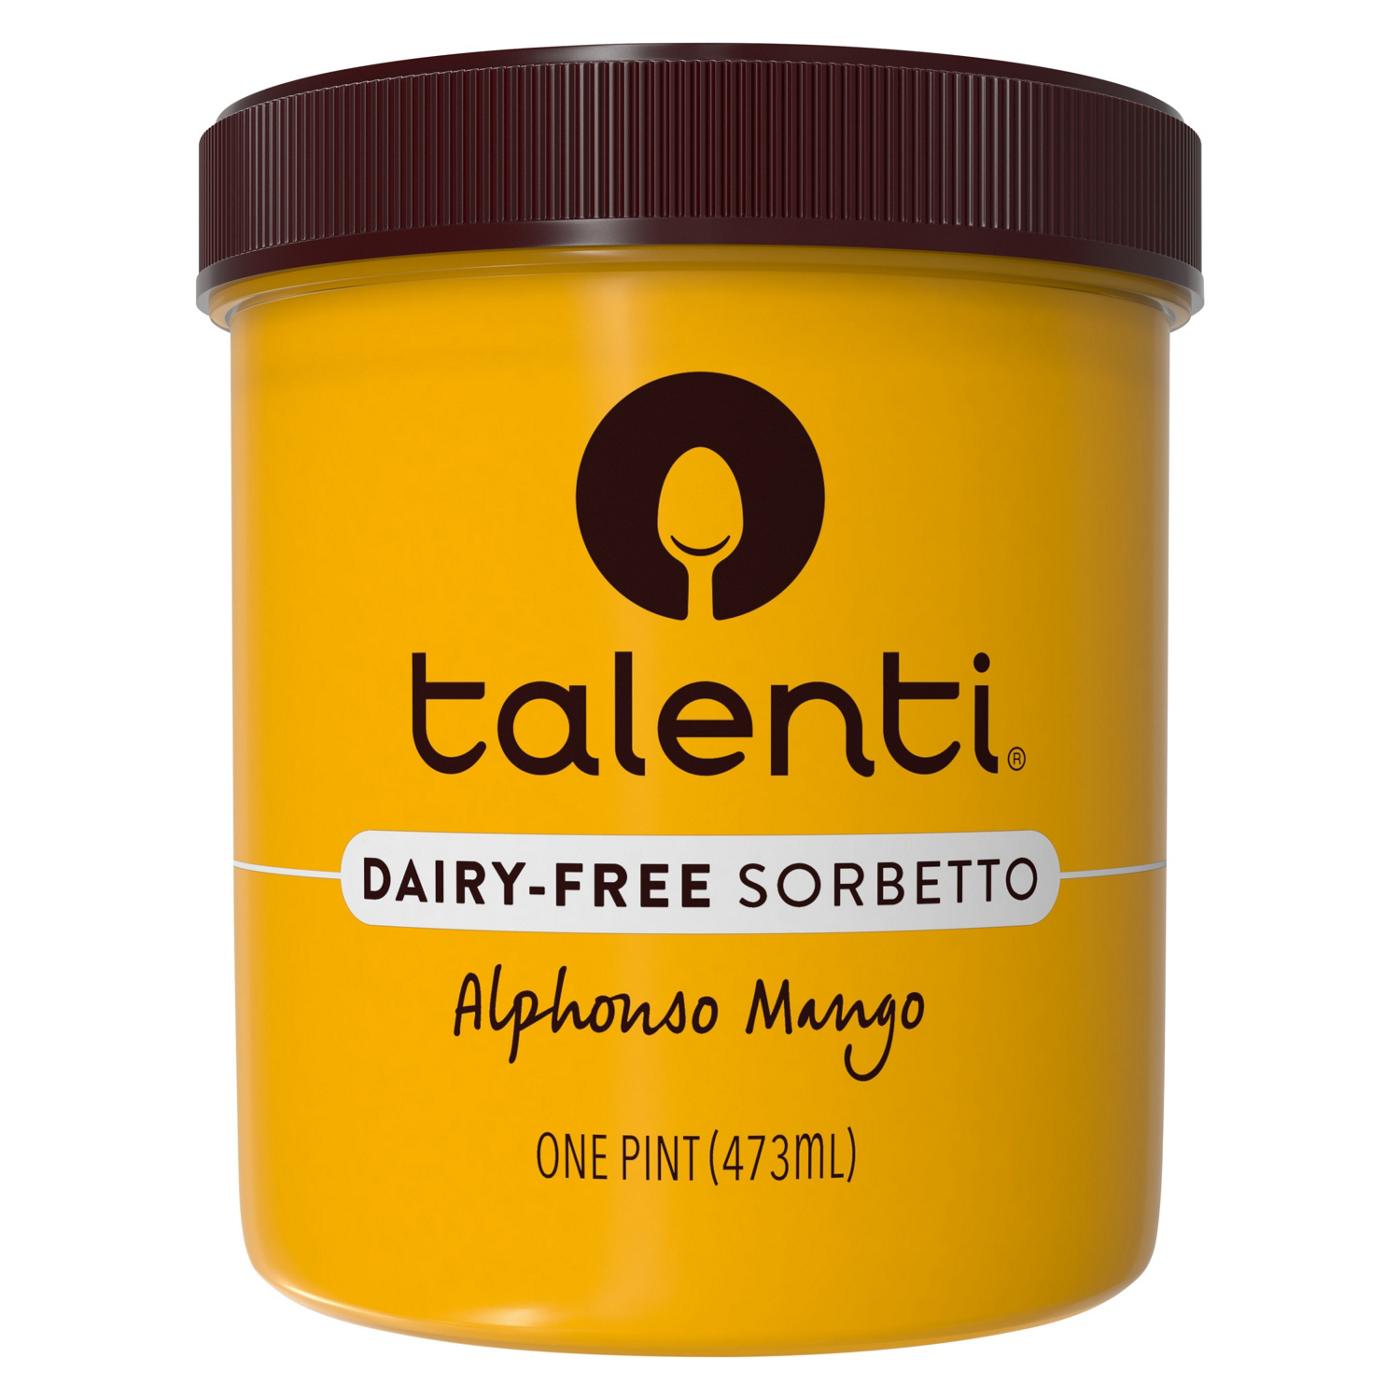 Talenti Alphonso Mango Dairy-Free Sorbetto; image 1 of 8